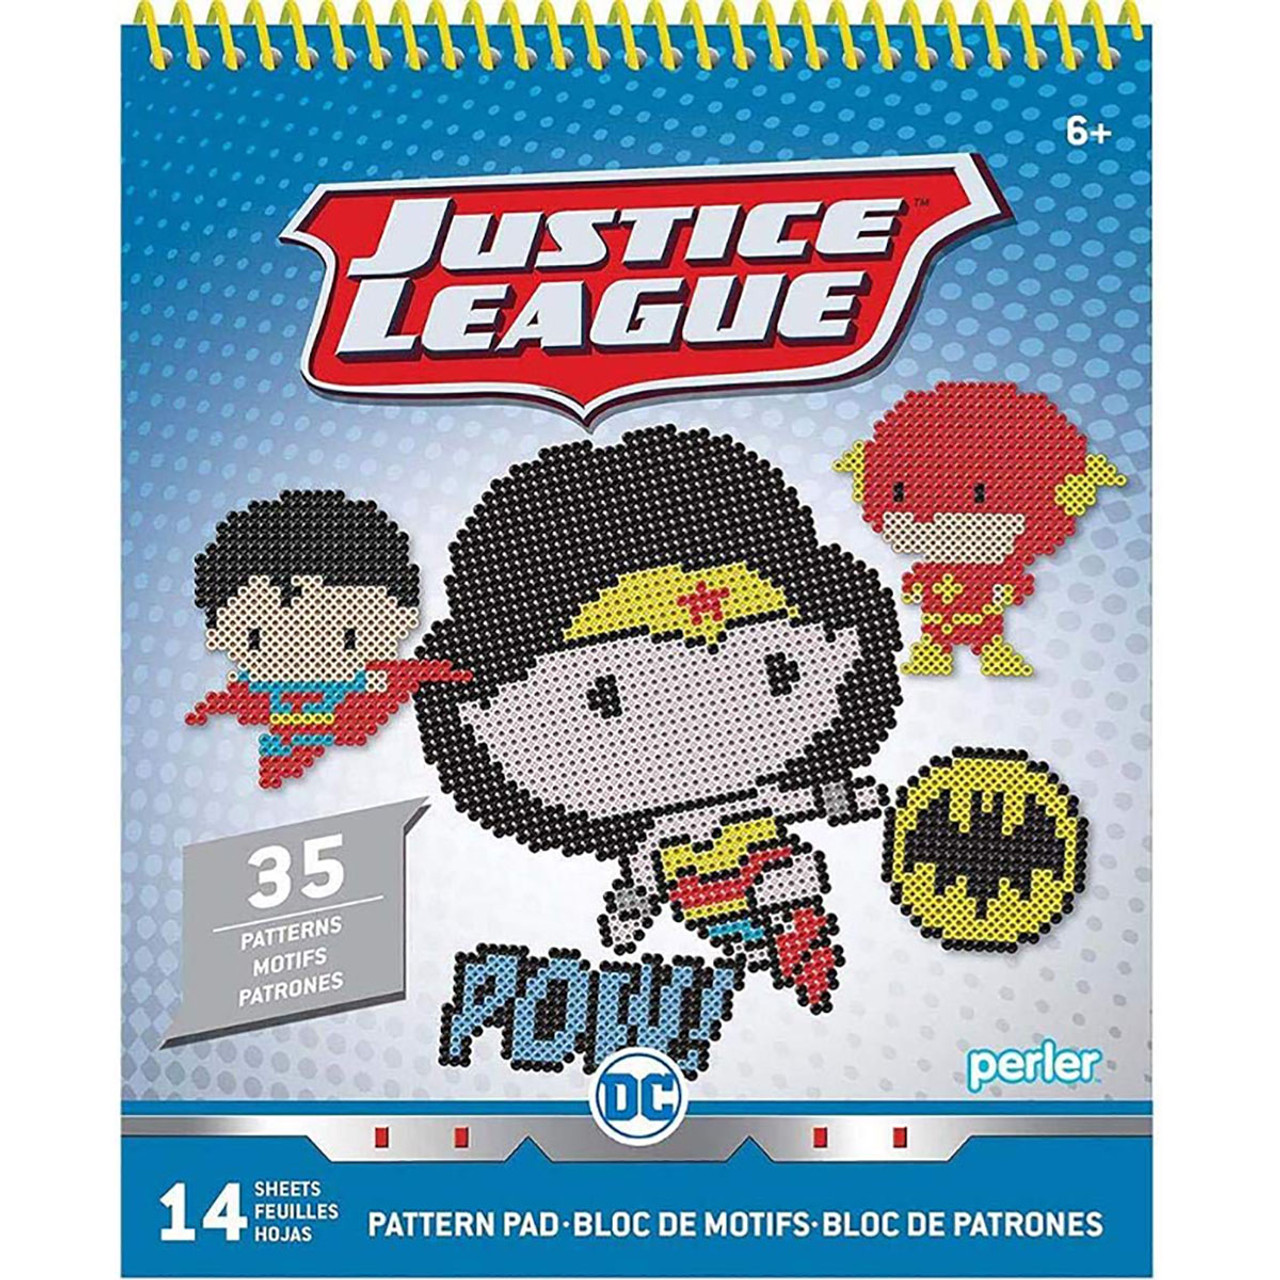 Perler DC Justice League Perler Bead Pattern Pad Vol. 2